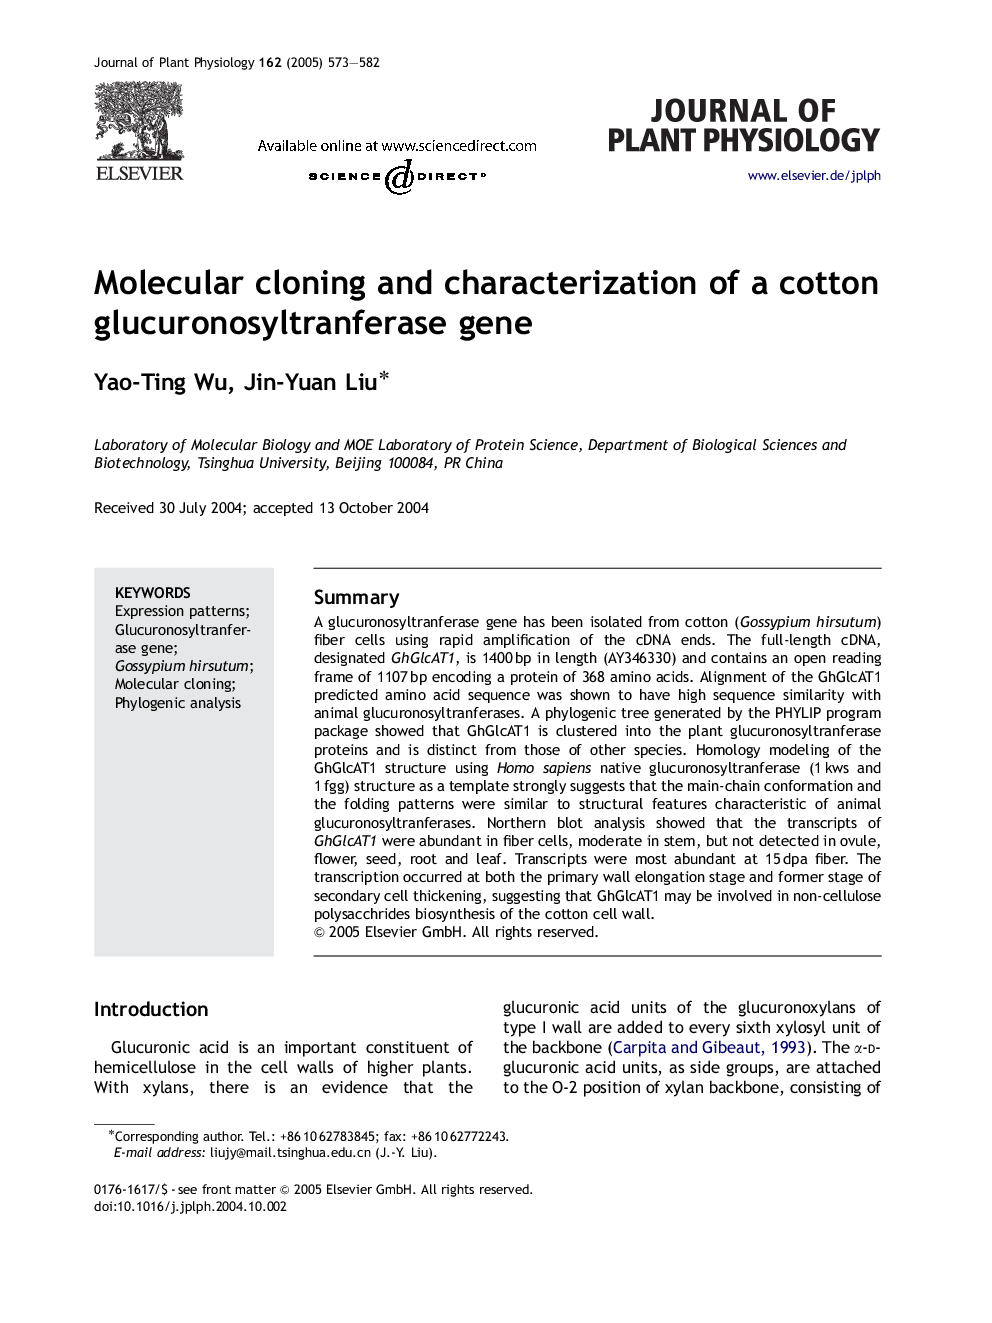 Molecular cloning and characterization of a cotton glucuronosyltranferase gene